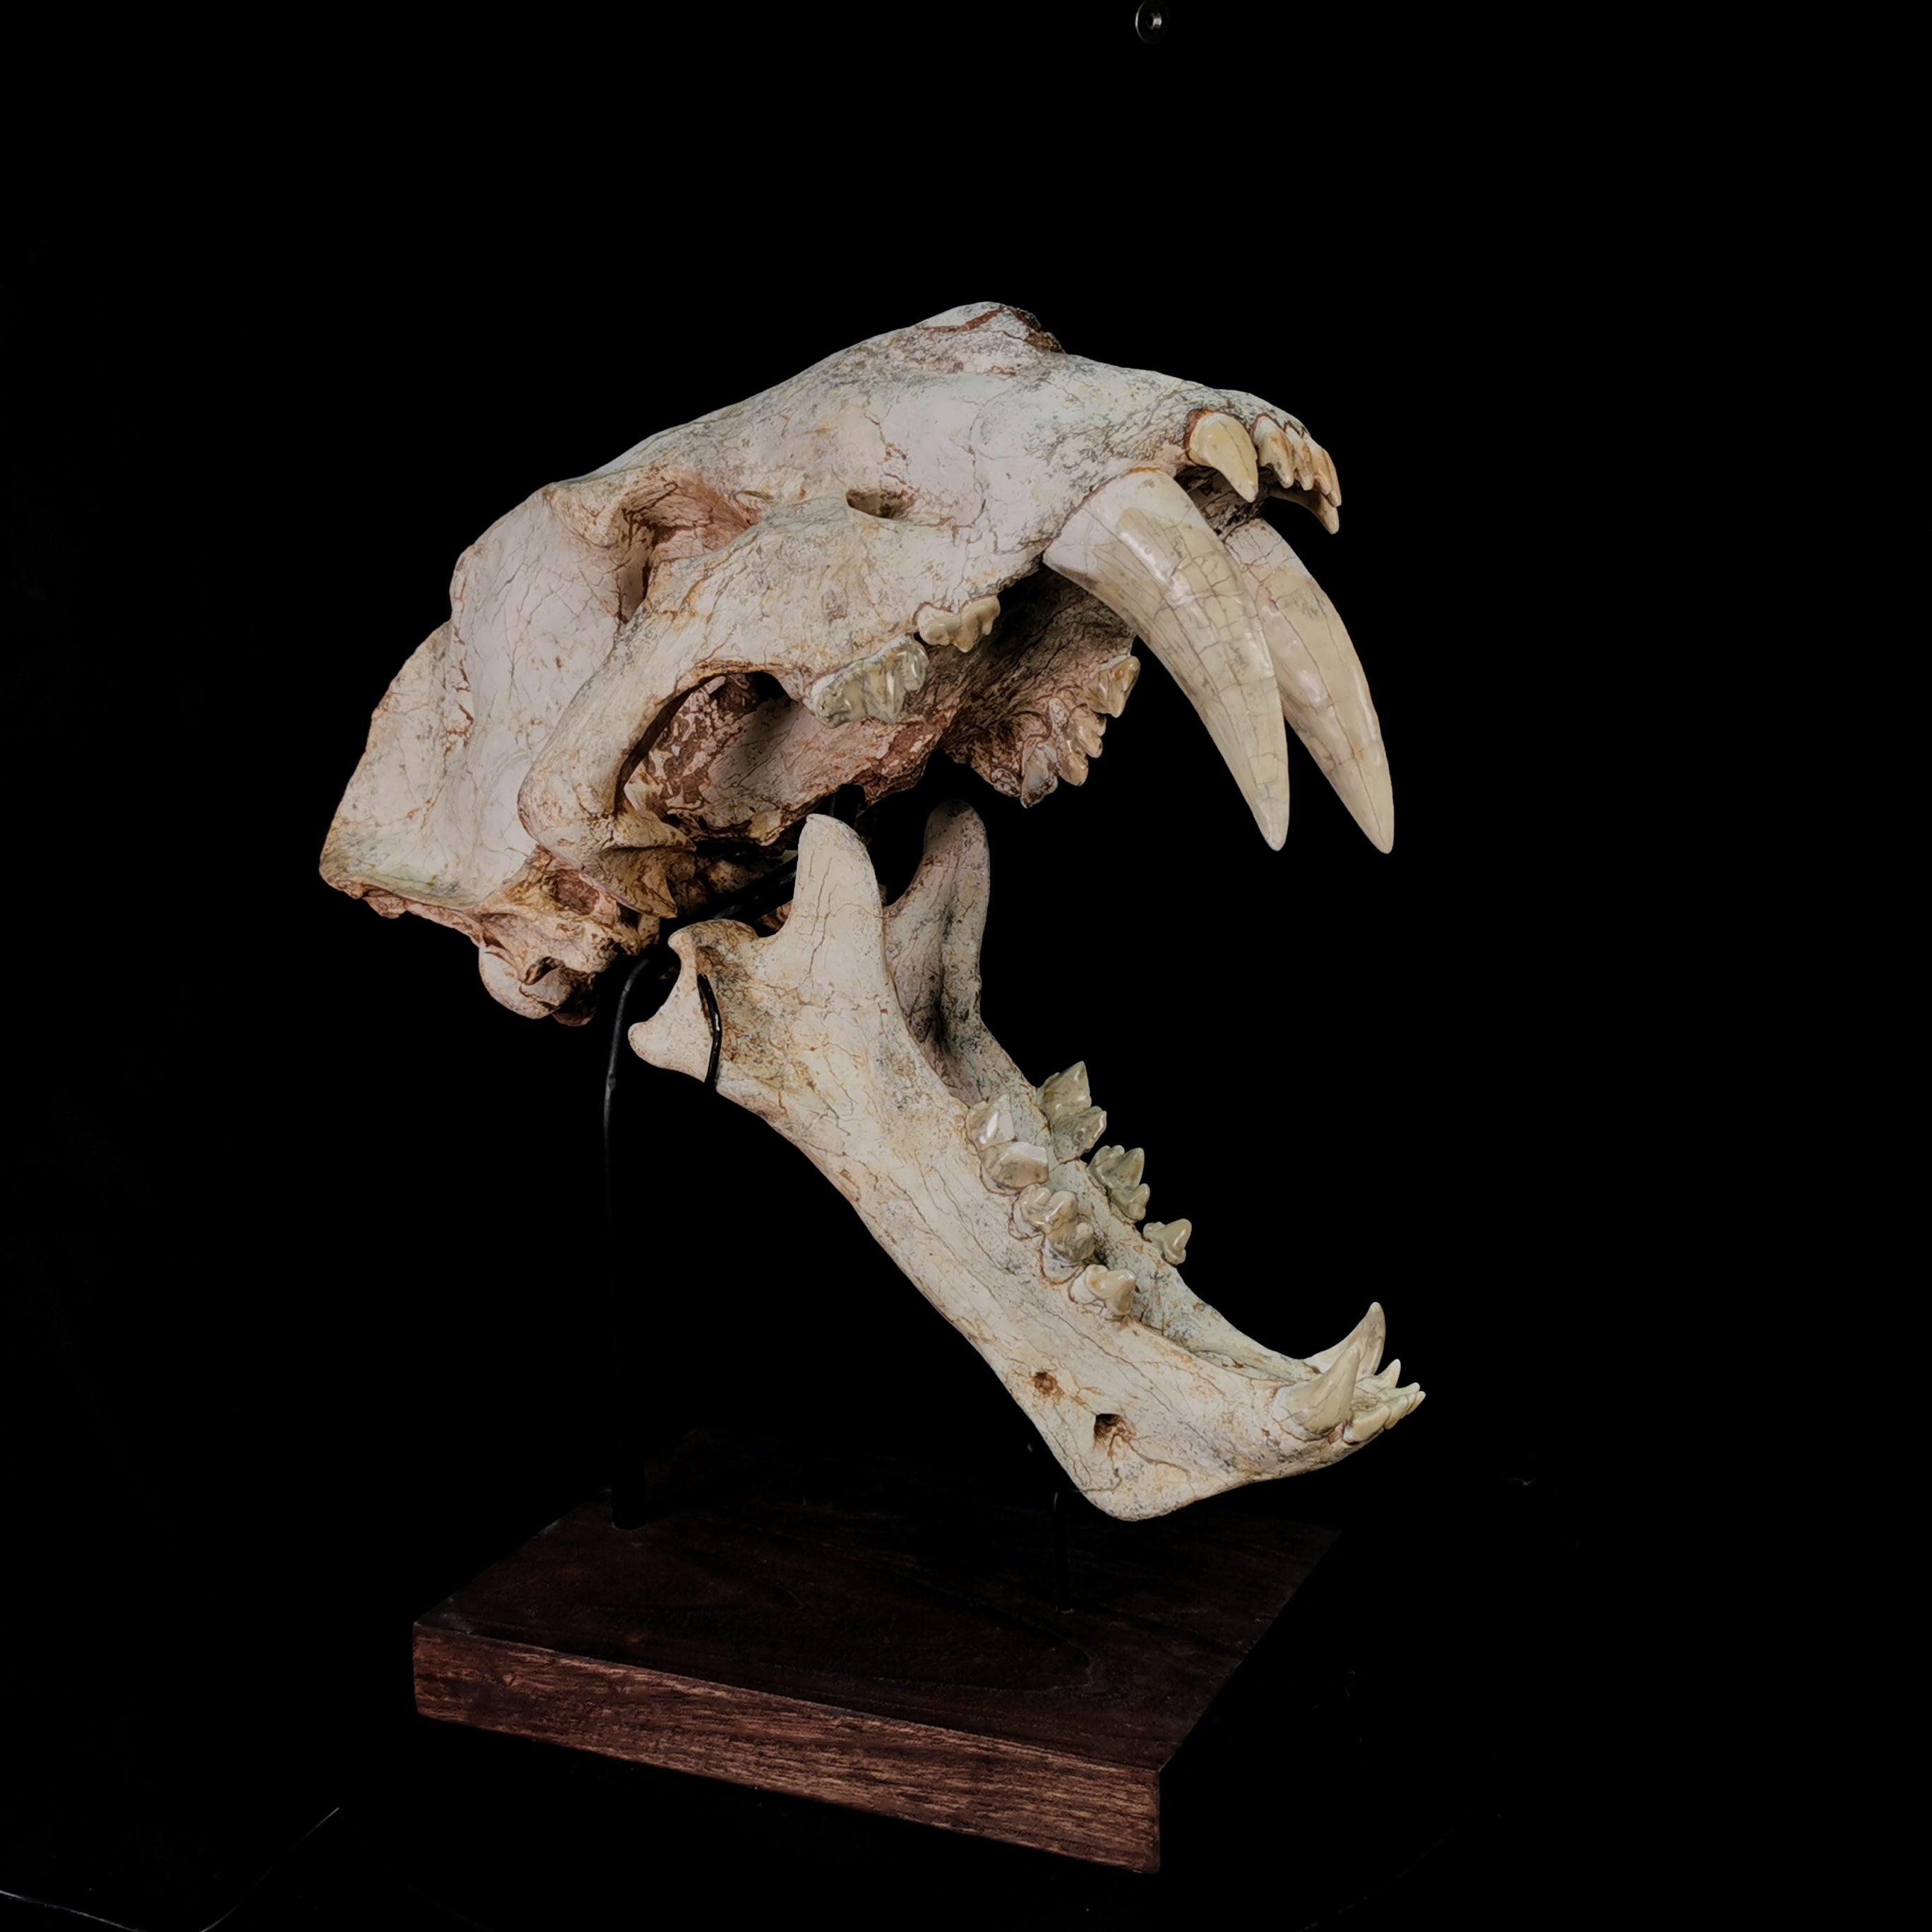 Exceedingly Huge 41.5cm Saber Toothed Cat Skull Fossil - Machairodus Giganteus